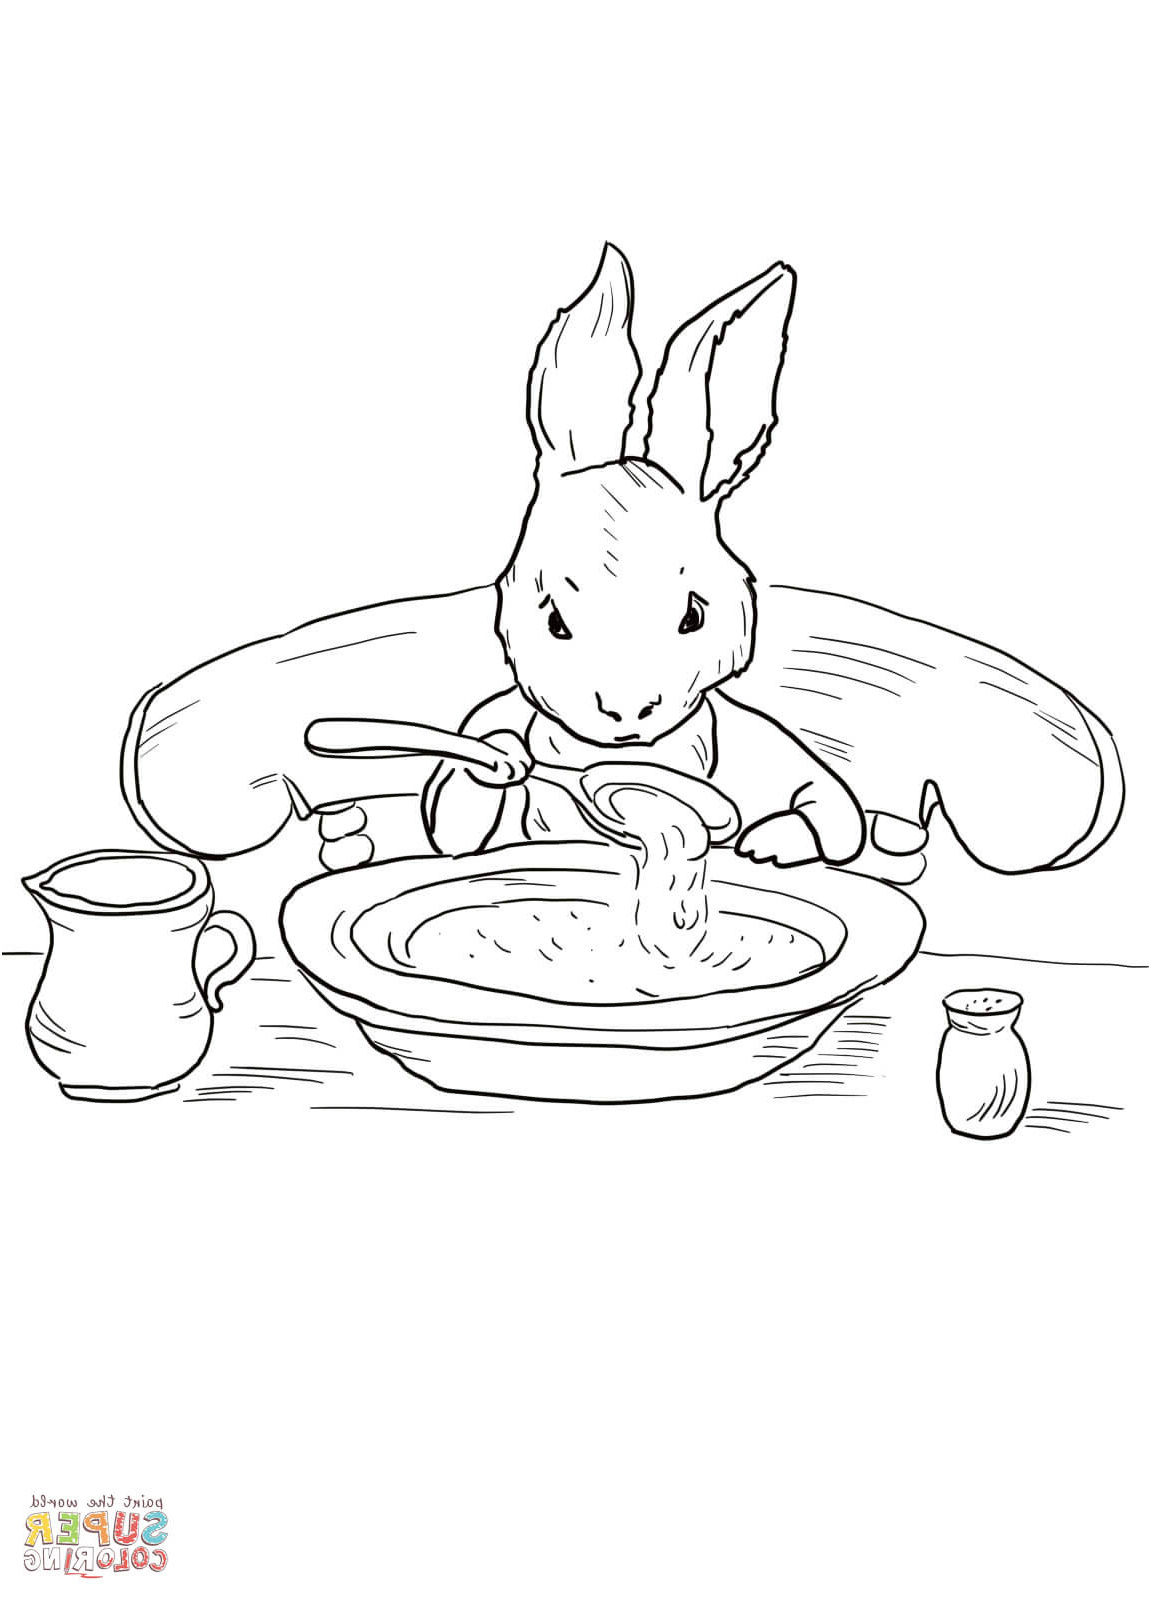 peter rabbit at home